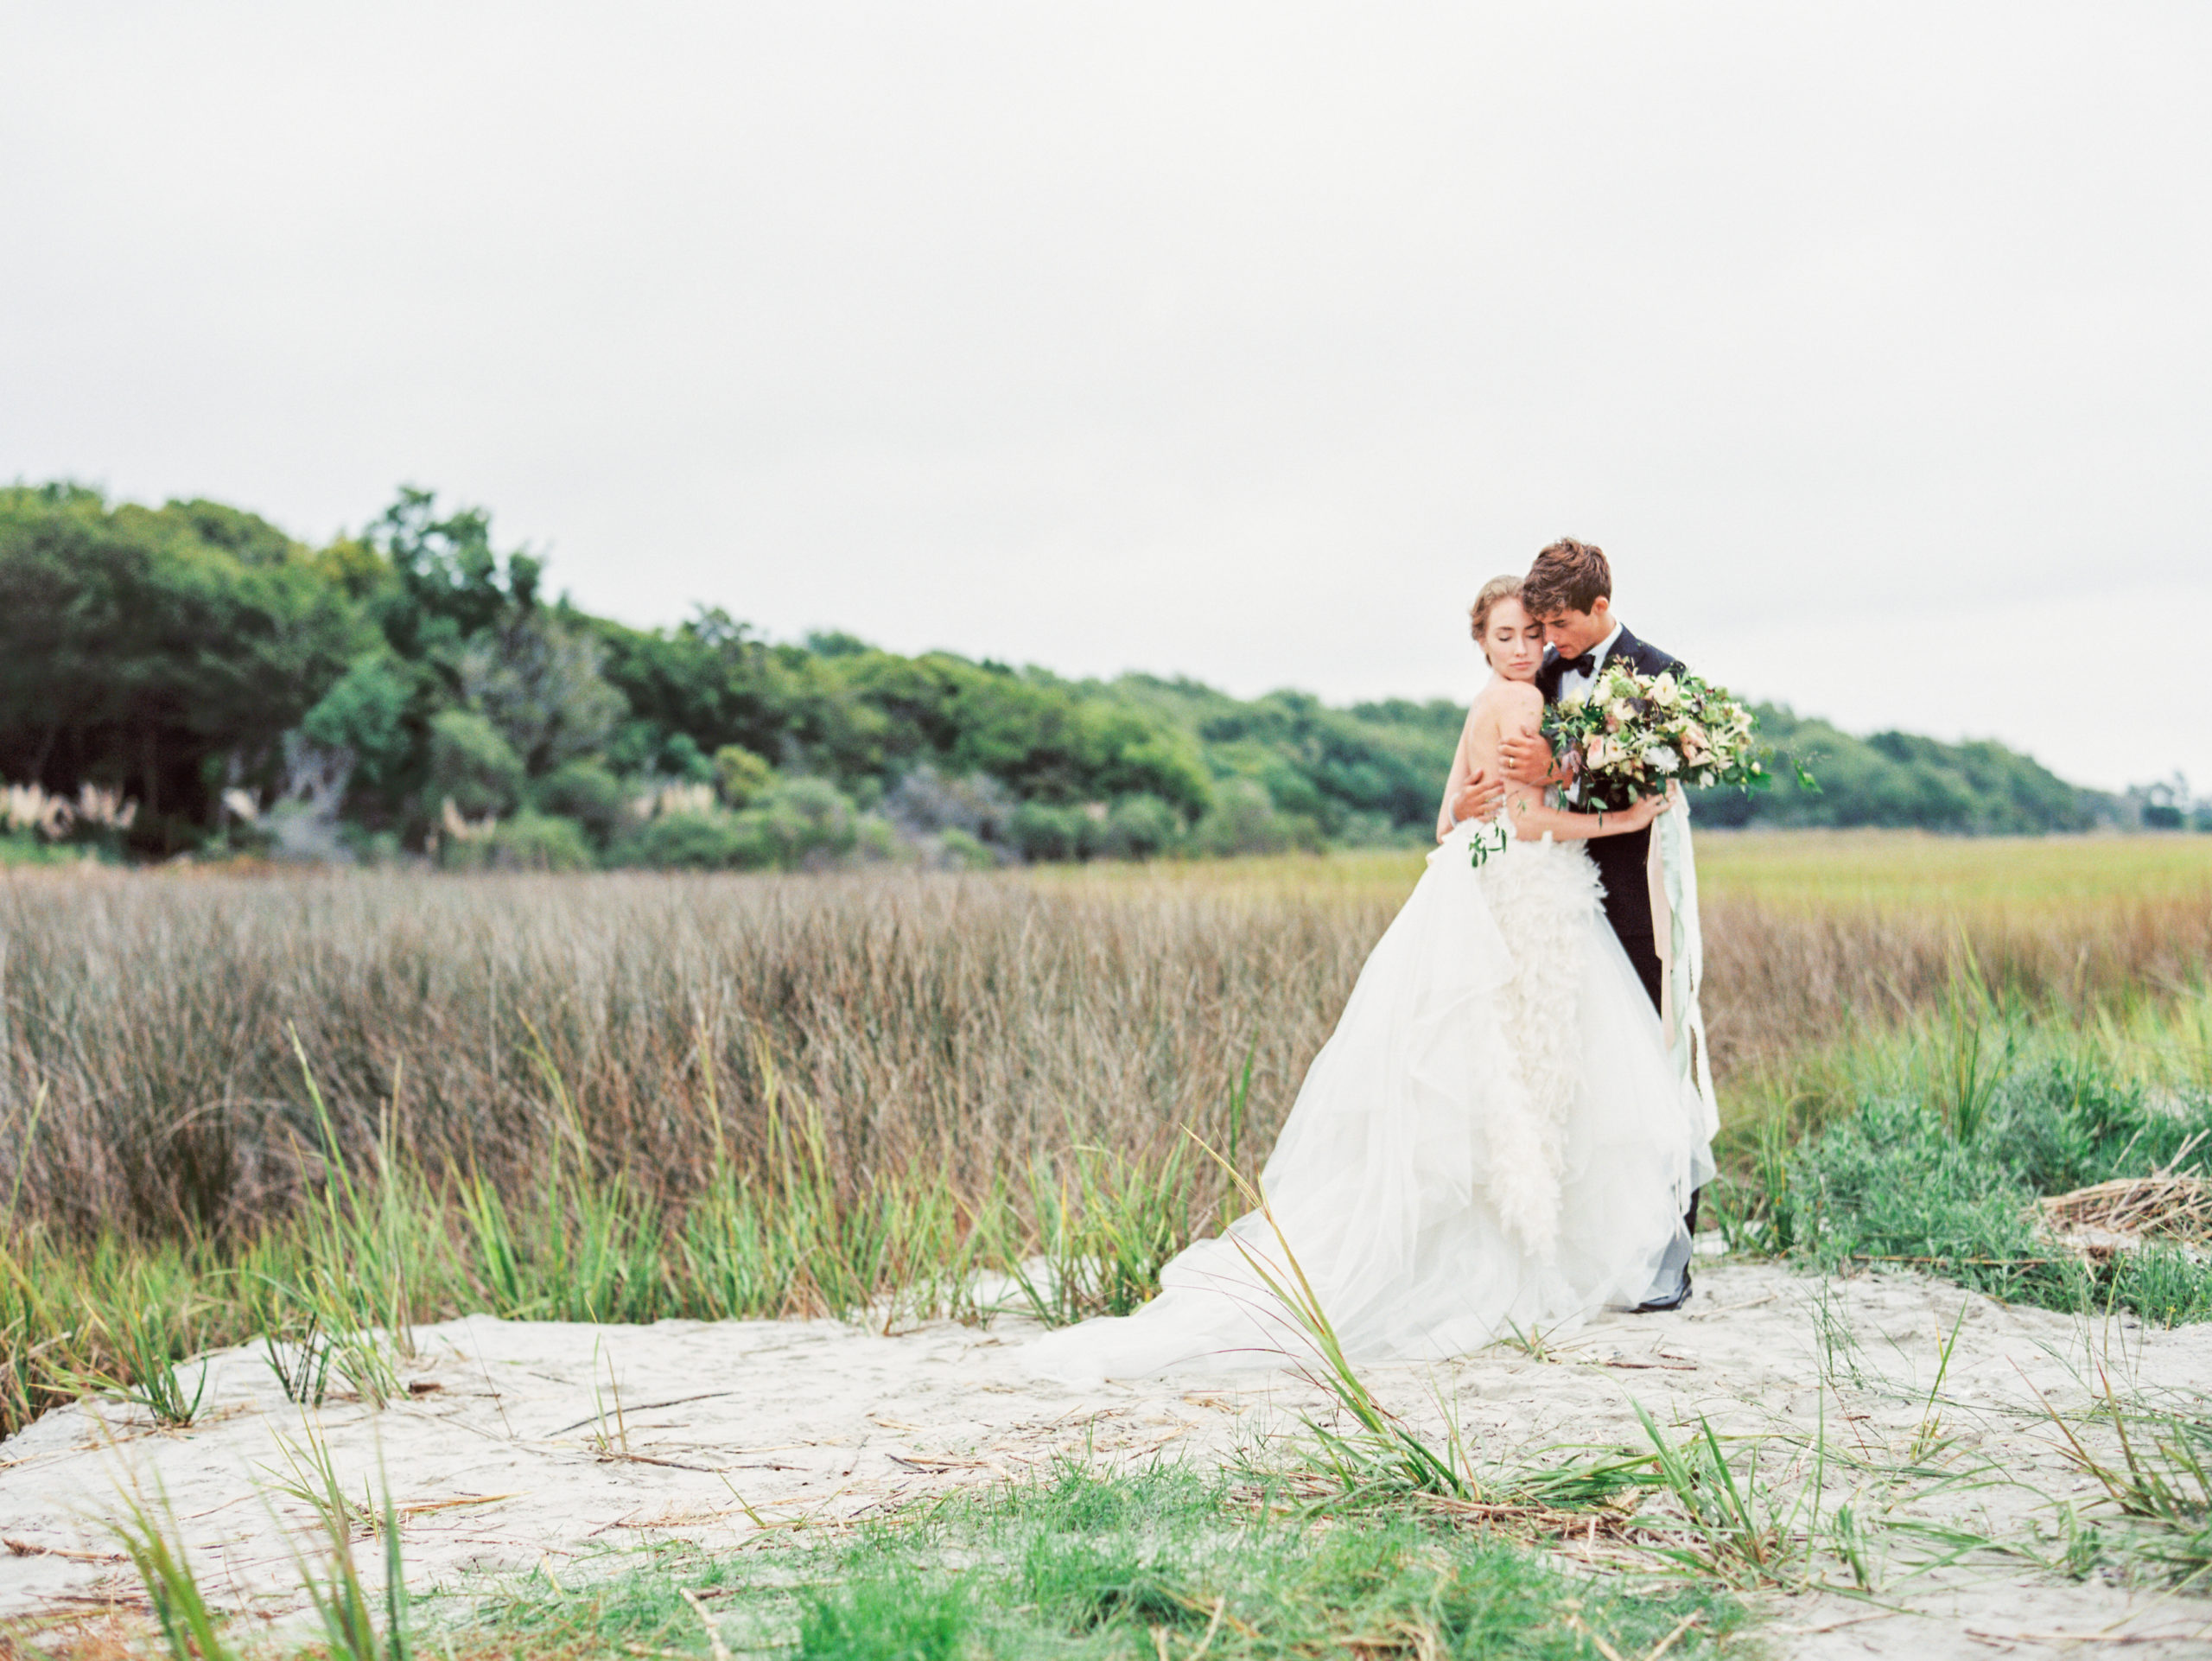 Romantic elopement getaway on the coastal beaches of Charleston, South Carolina by J.J. Au'Clair.